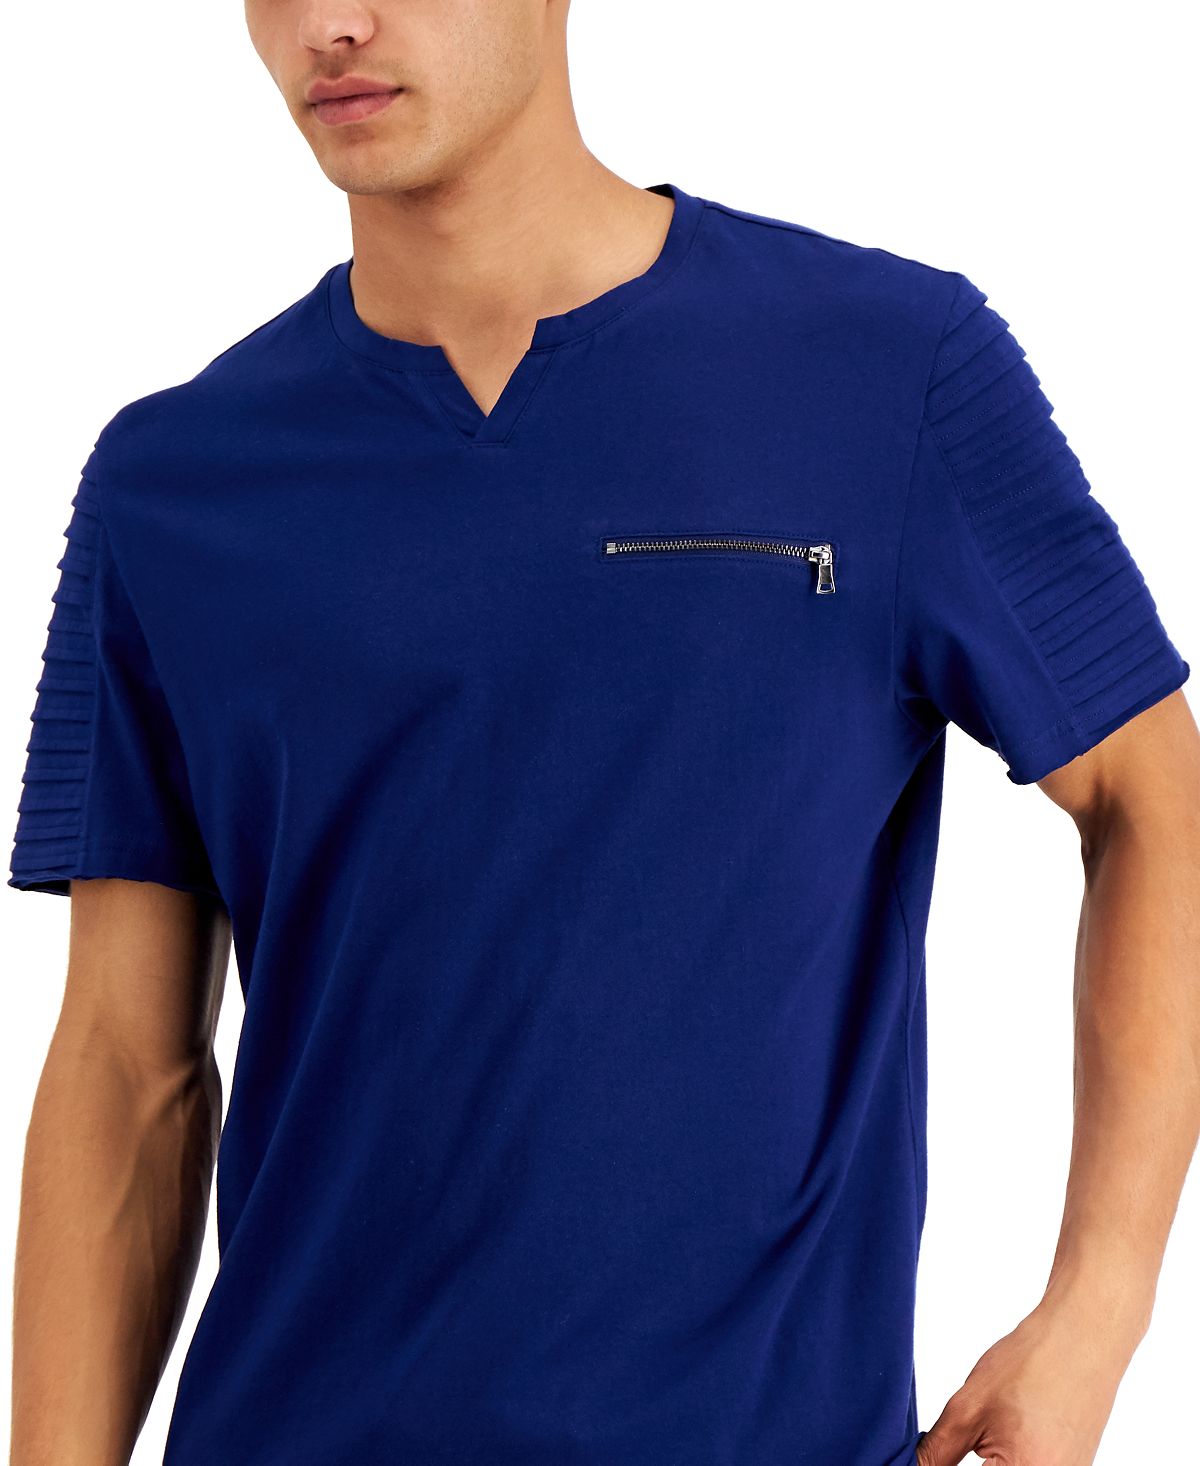 Inc International Concepts Pintucked Split-neck T-shirt Navy Bud